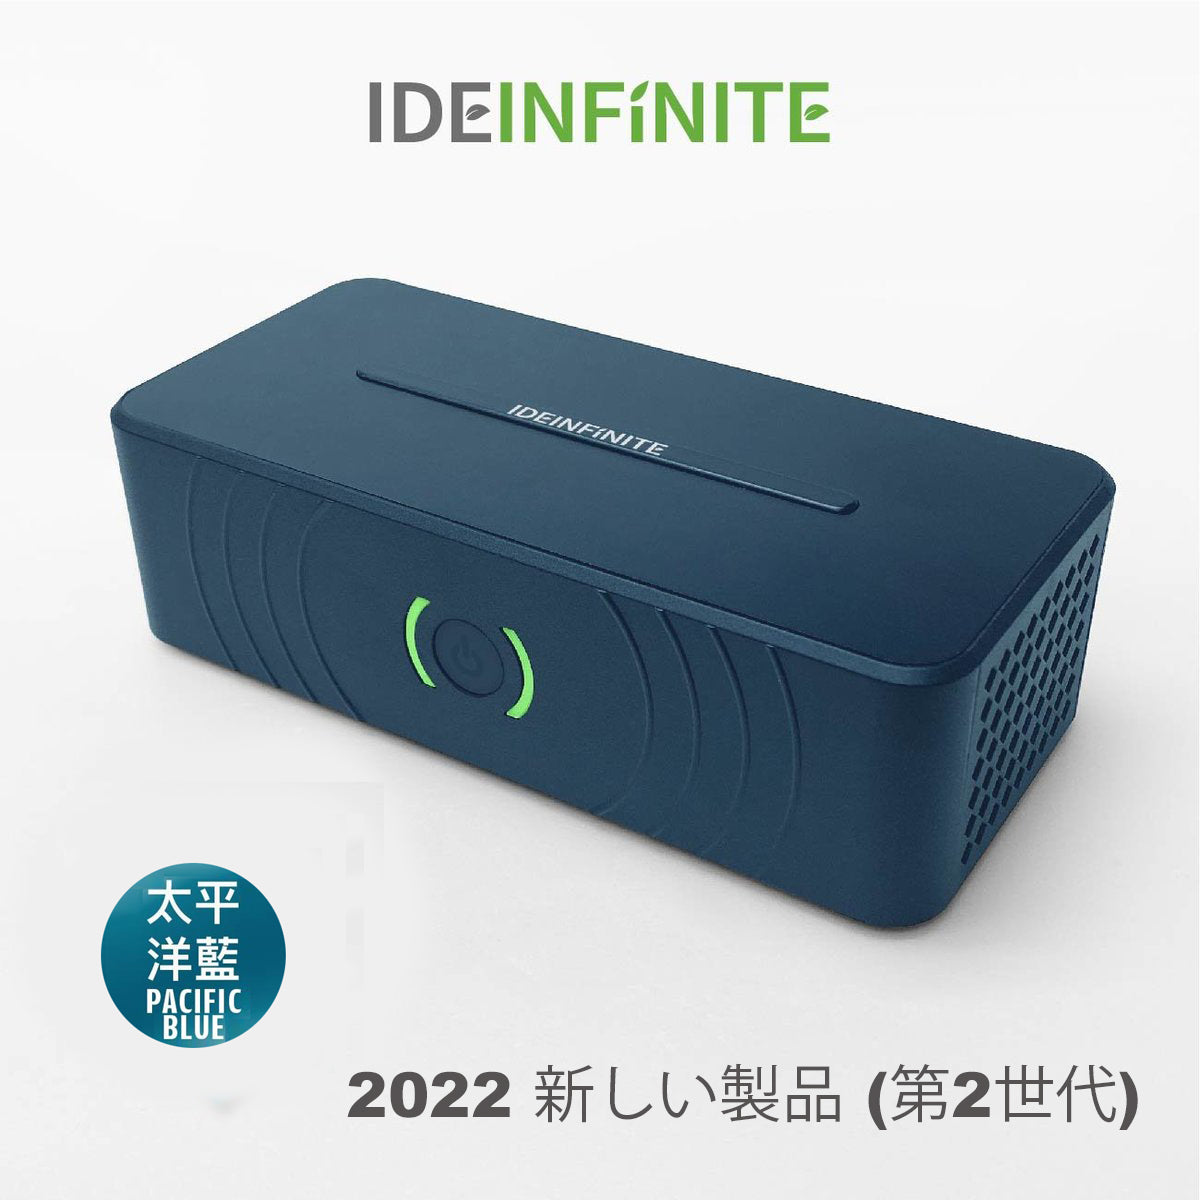 IDEinfinite 負離子臭氧空氣消毒器 (太平洋藍)